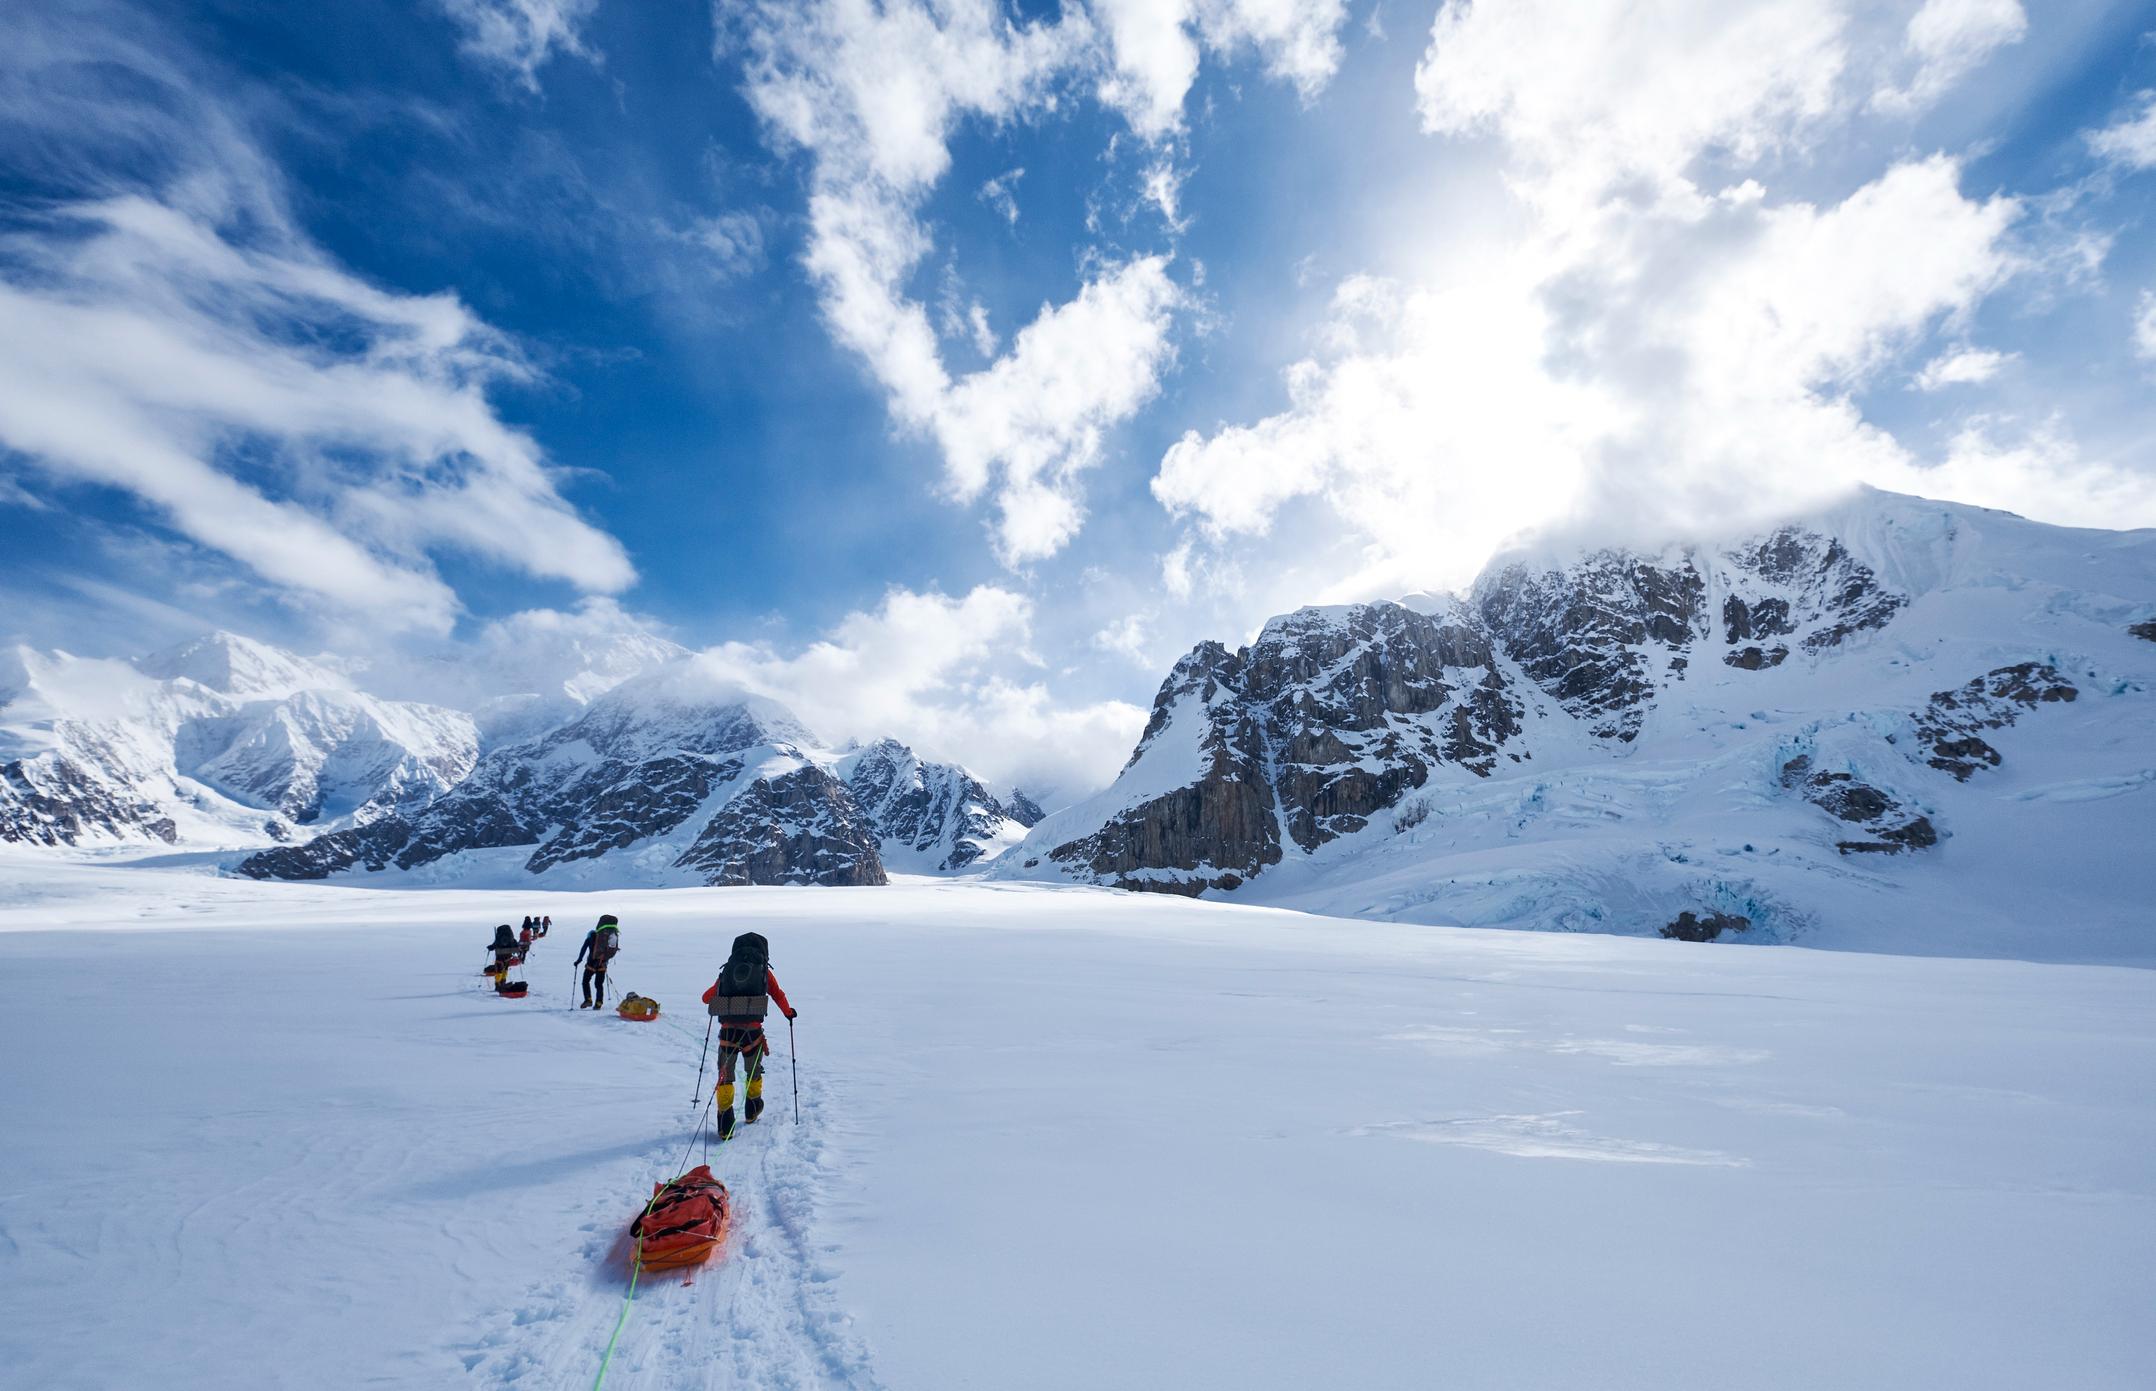 Climbers pulling sleds through snow on an expedition to climb Mount Denali, Alaska